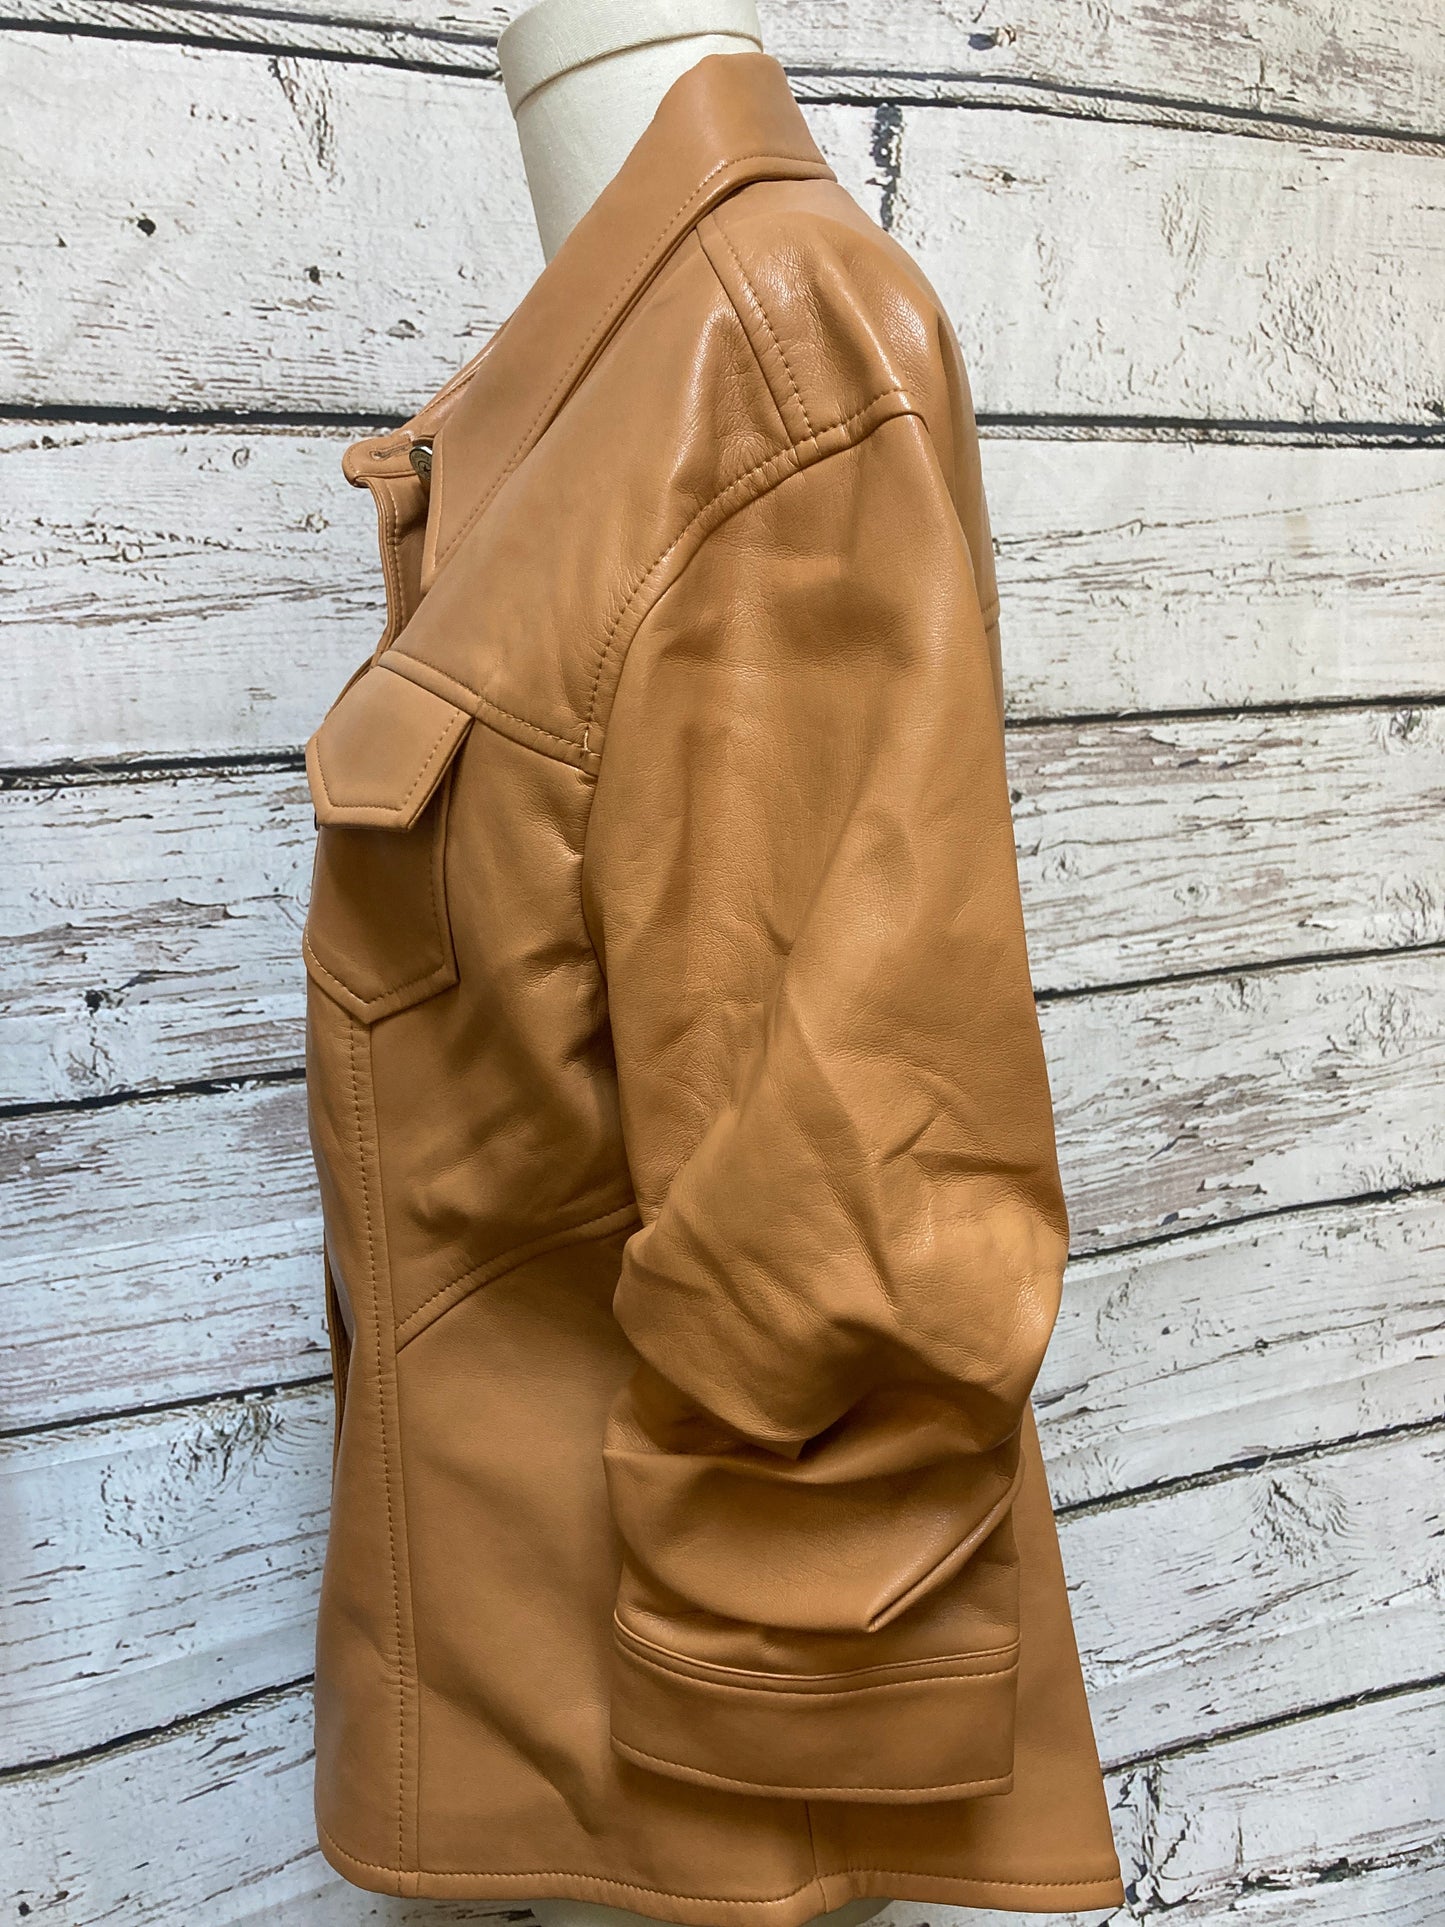 Coat Leather By Cma  Size: 14